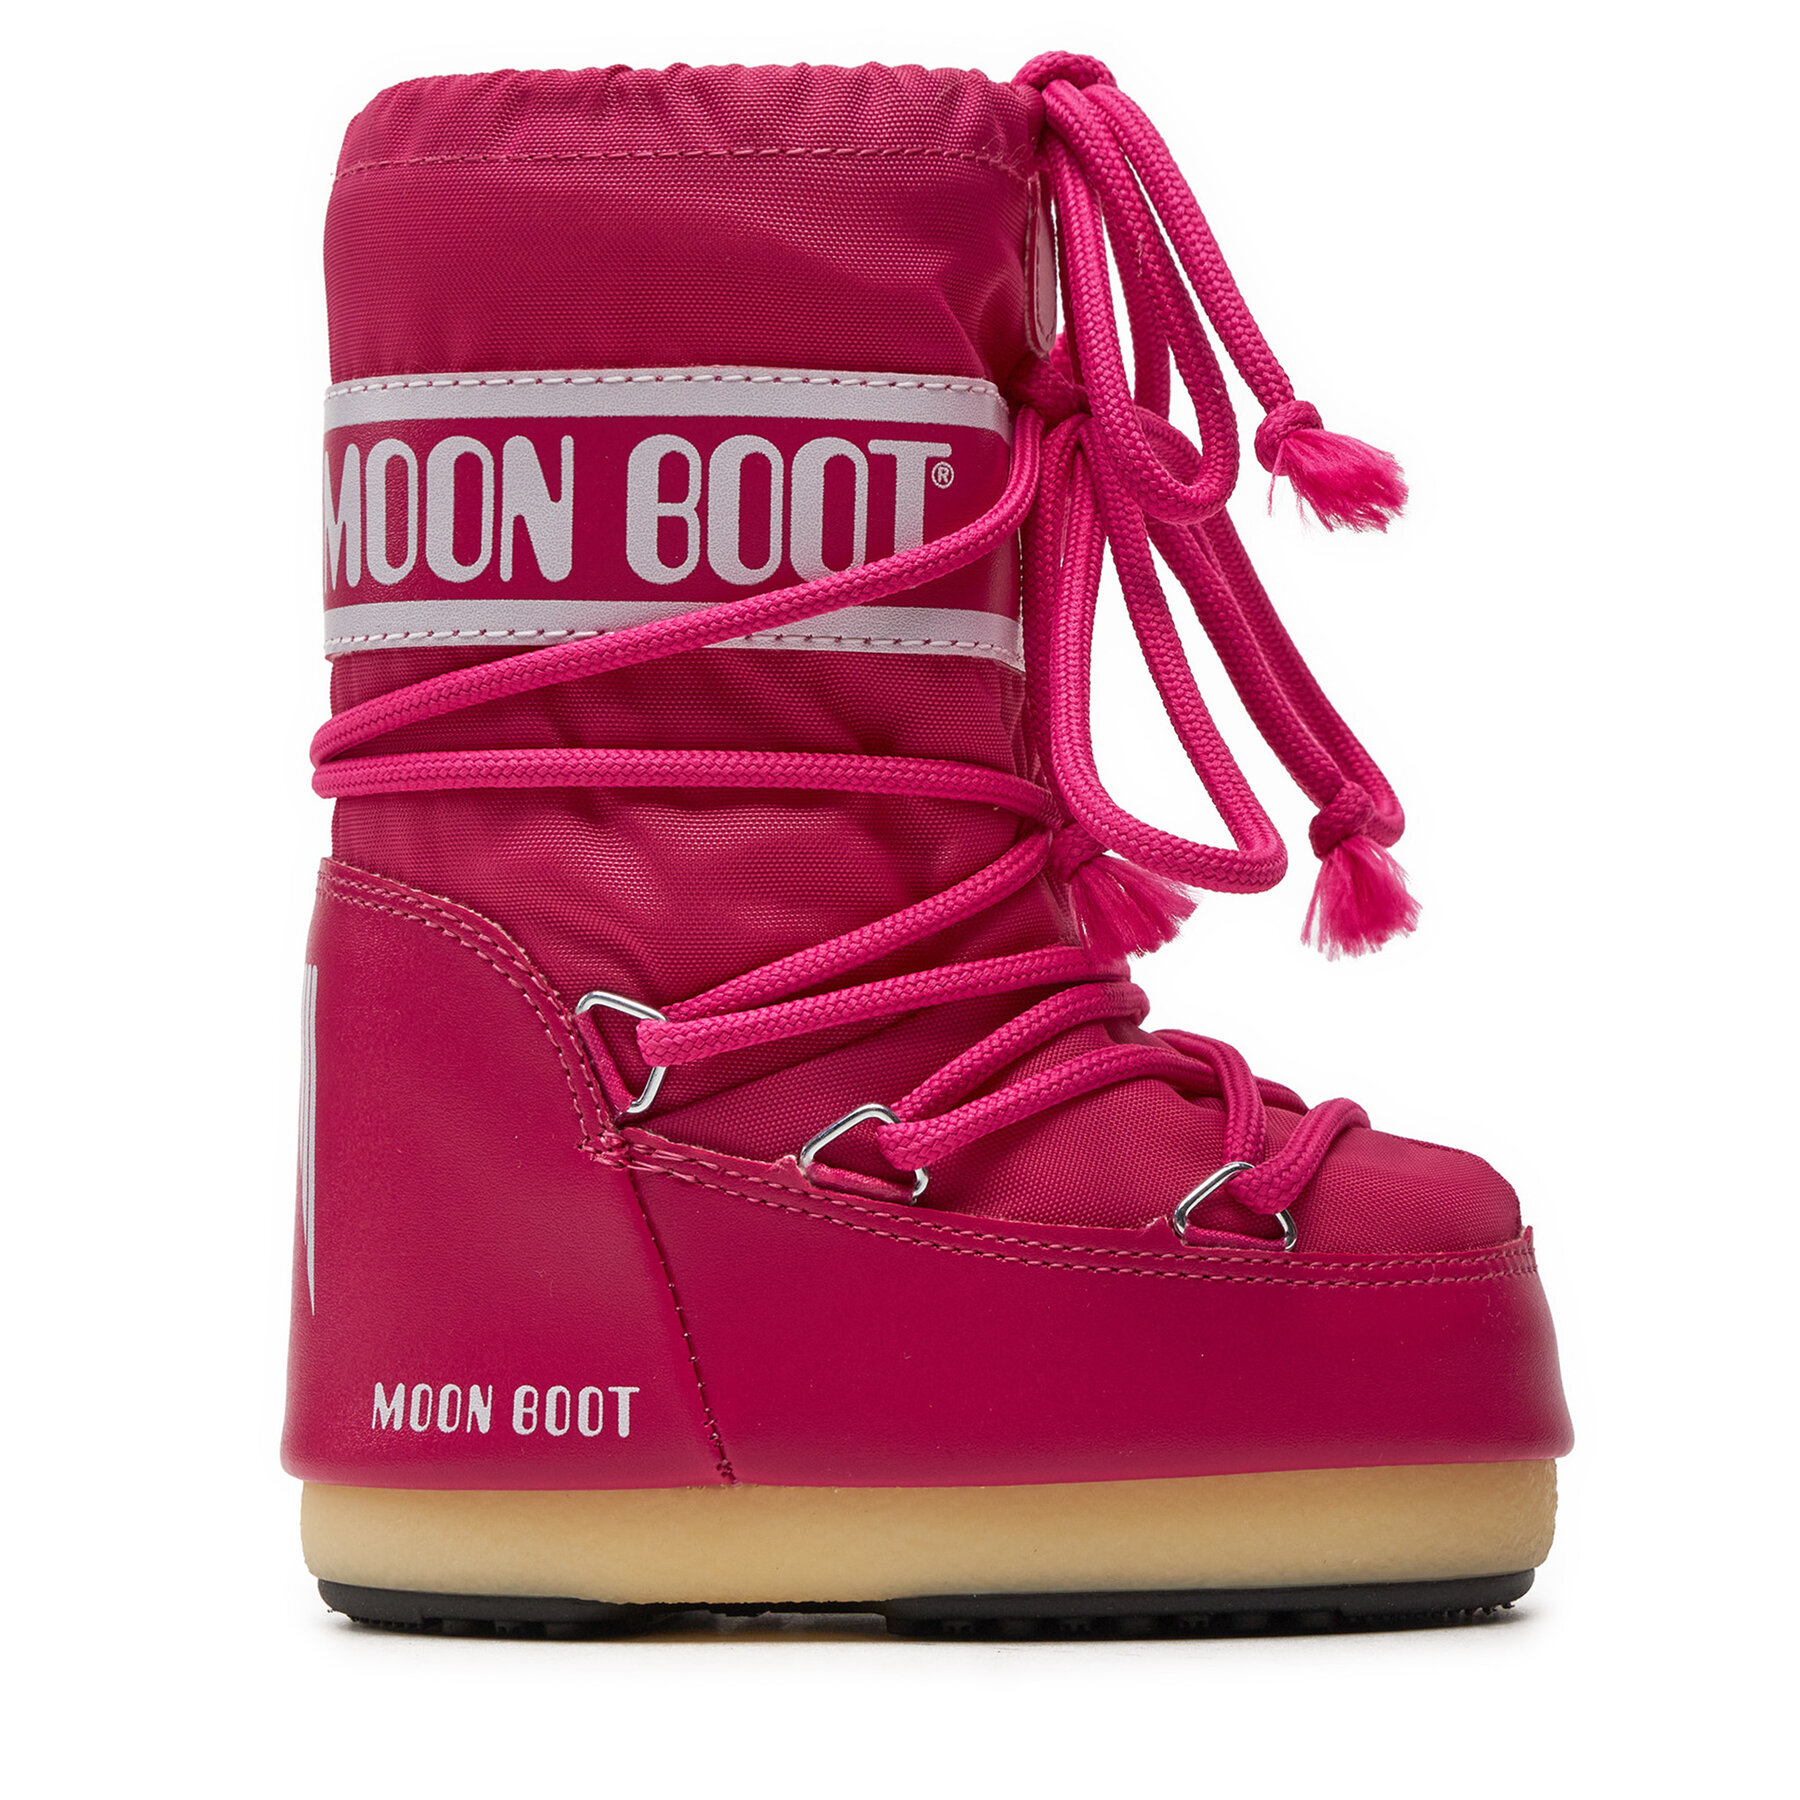 Comprar en oferta Moon Boot Nylon pink-bouganville